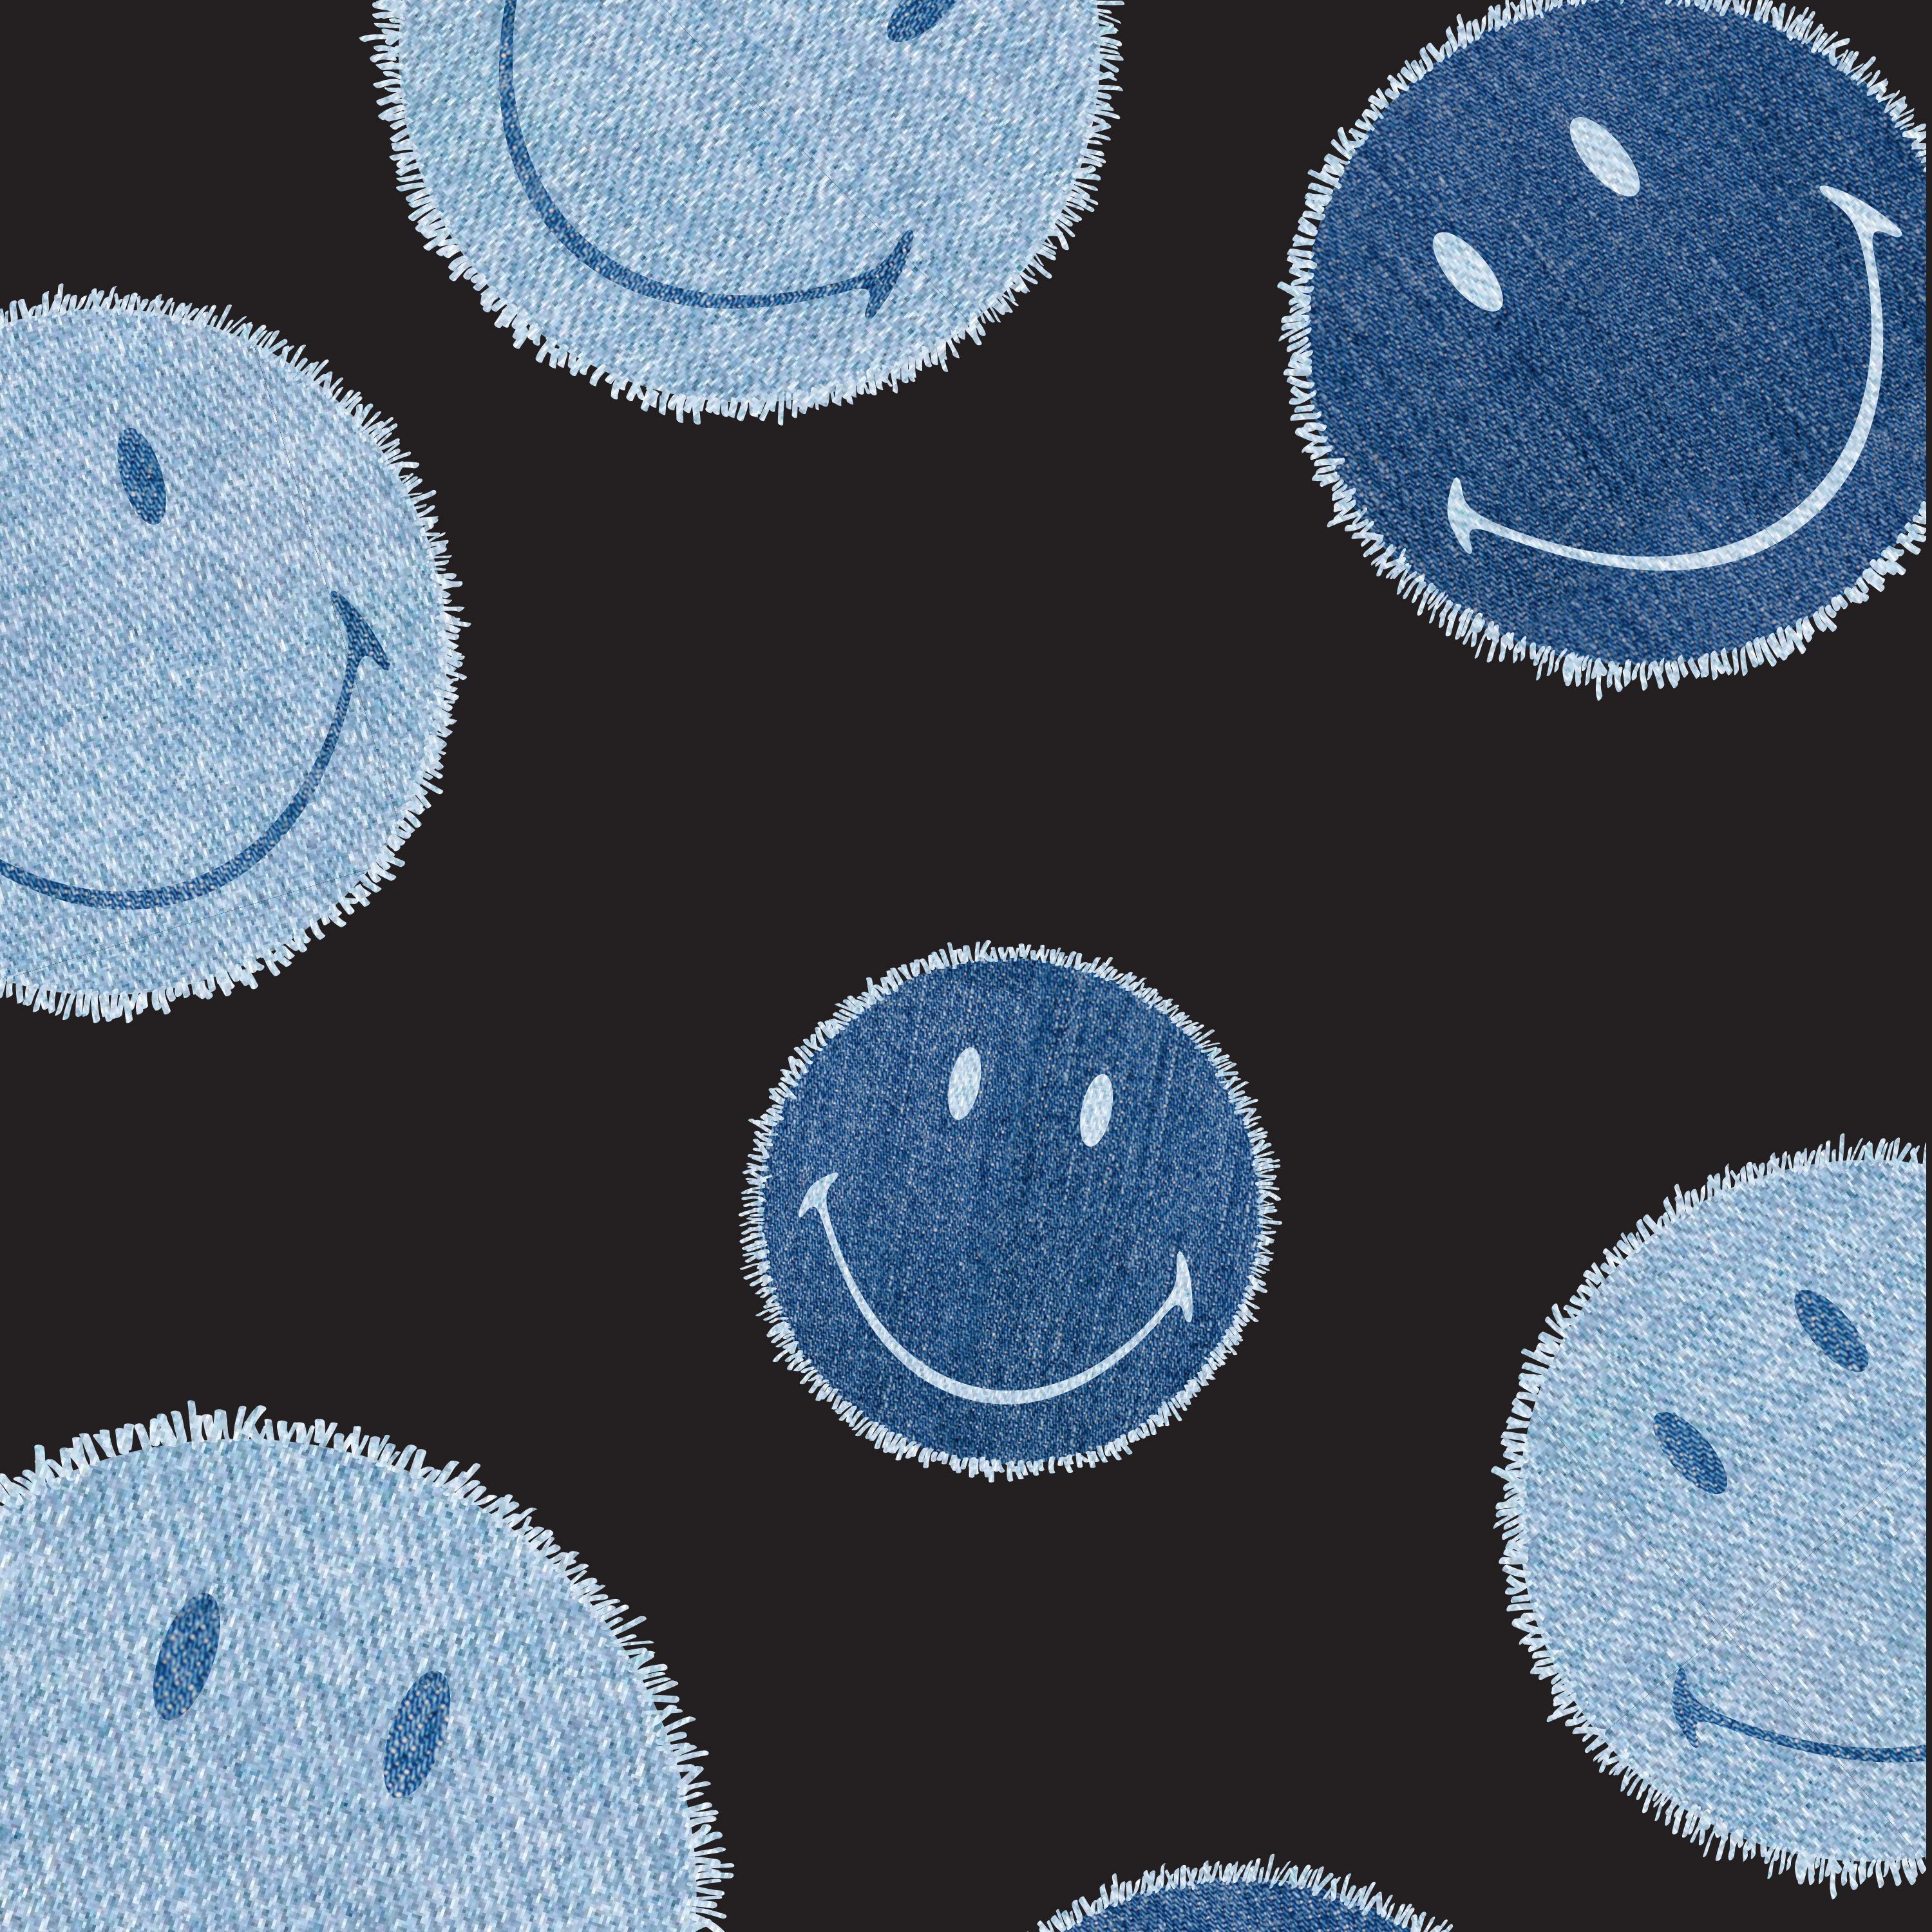 Original Smiley Art. Blue smiley face wallpaper aesthetic, Tshirt printing design, Indie drawings